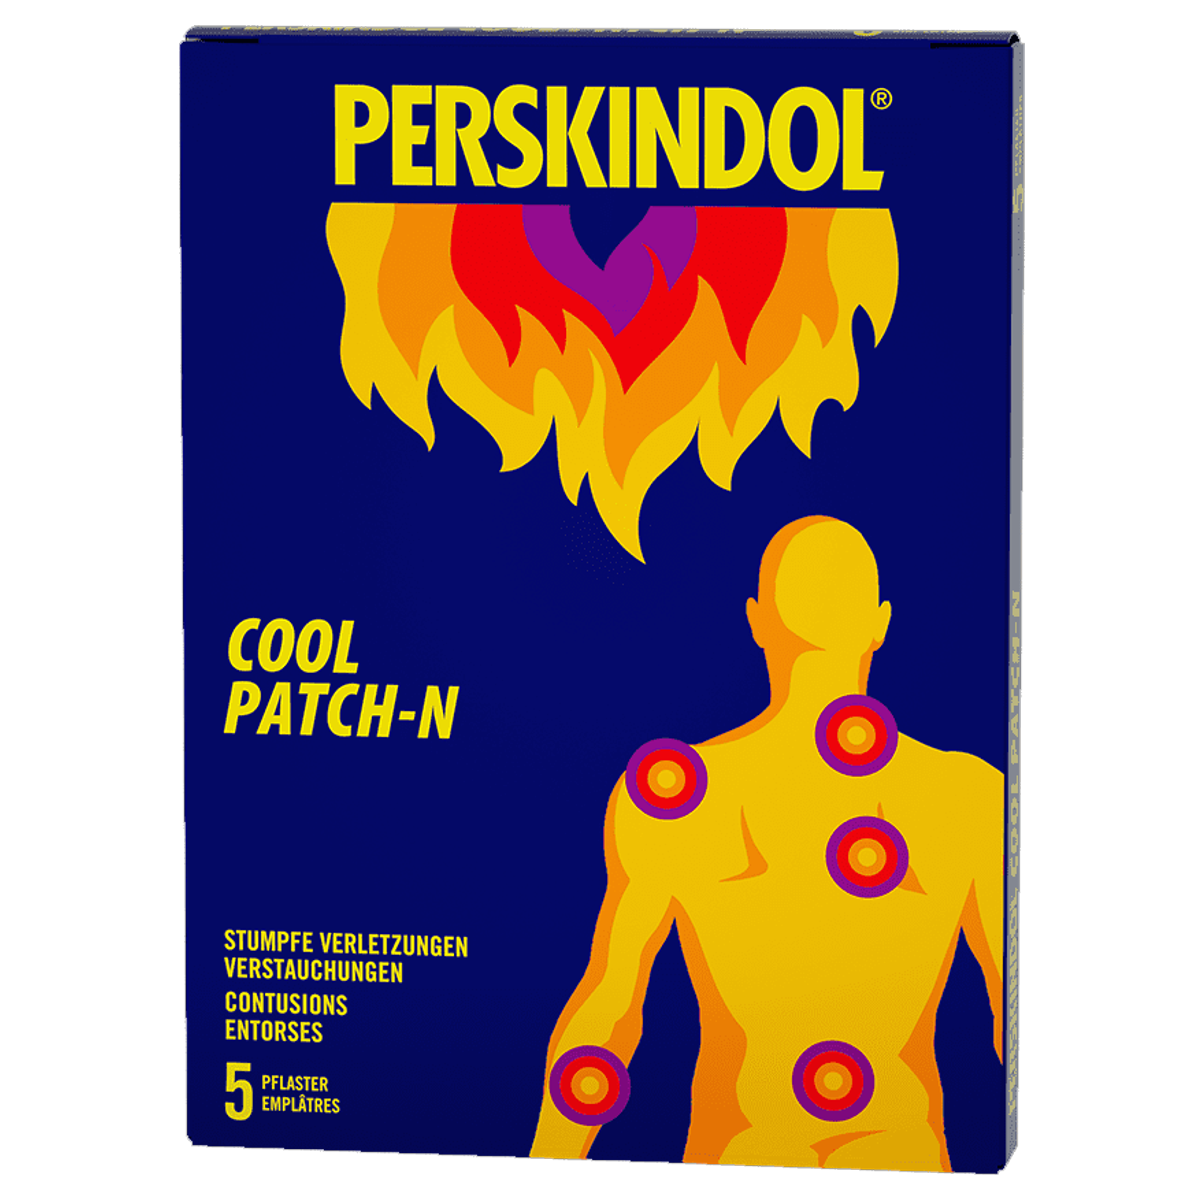 PERSKINDOL Cool Patch-N 5 Stück